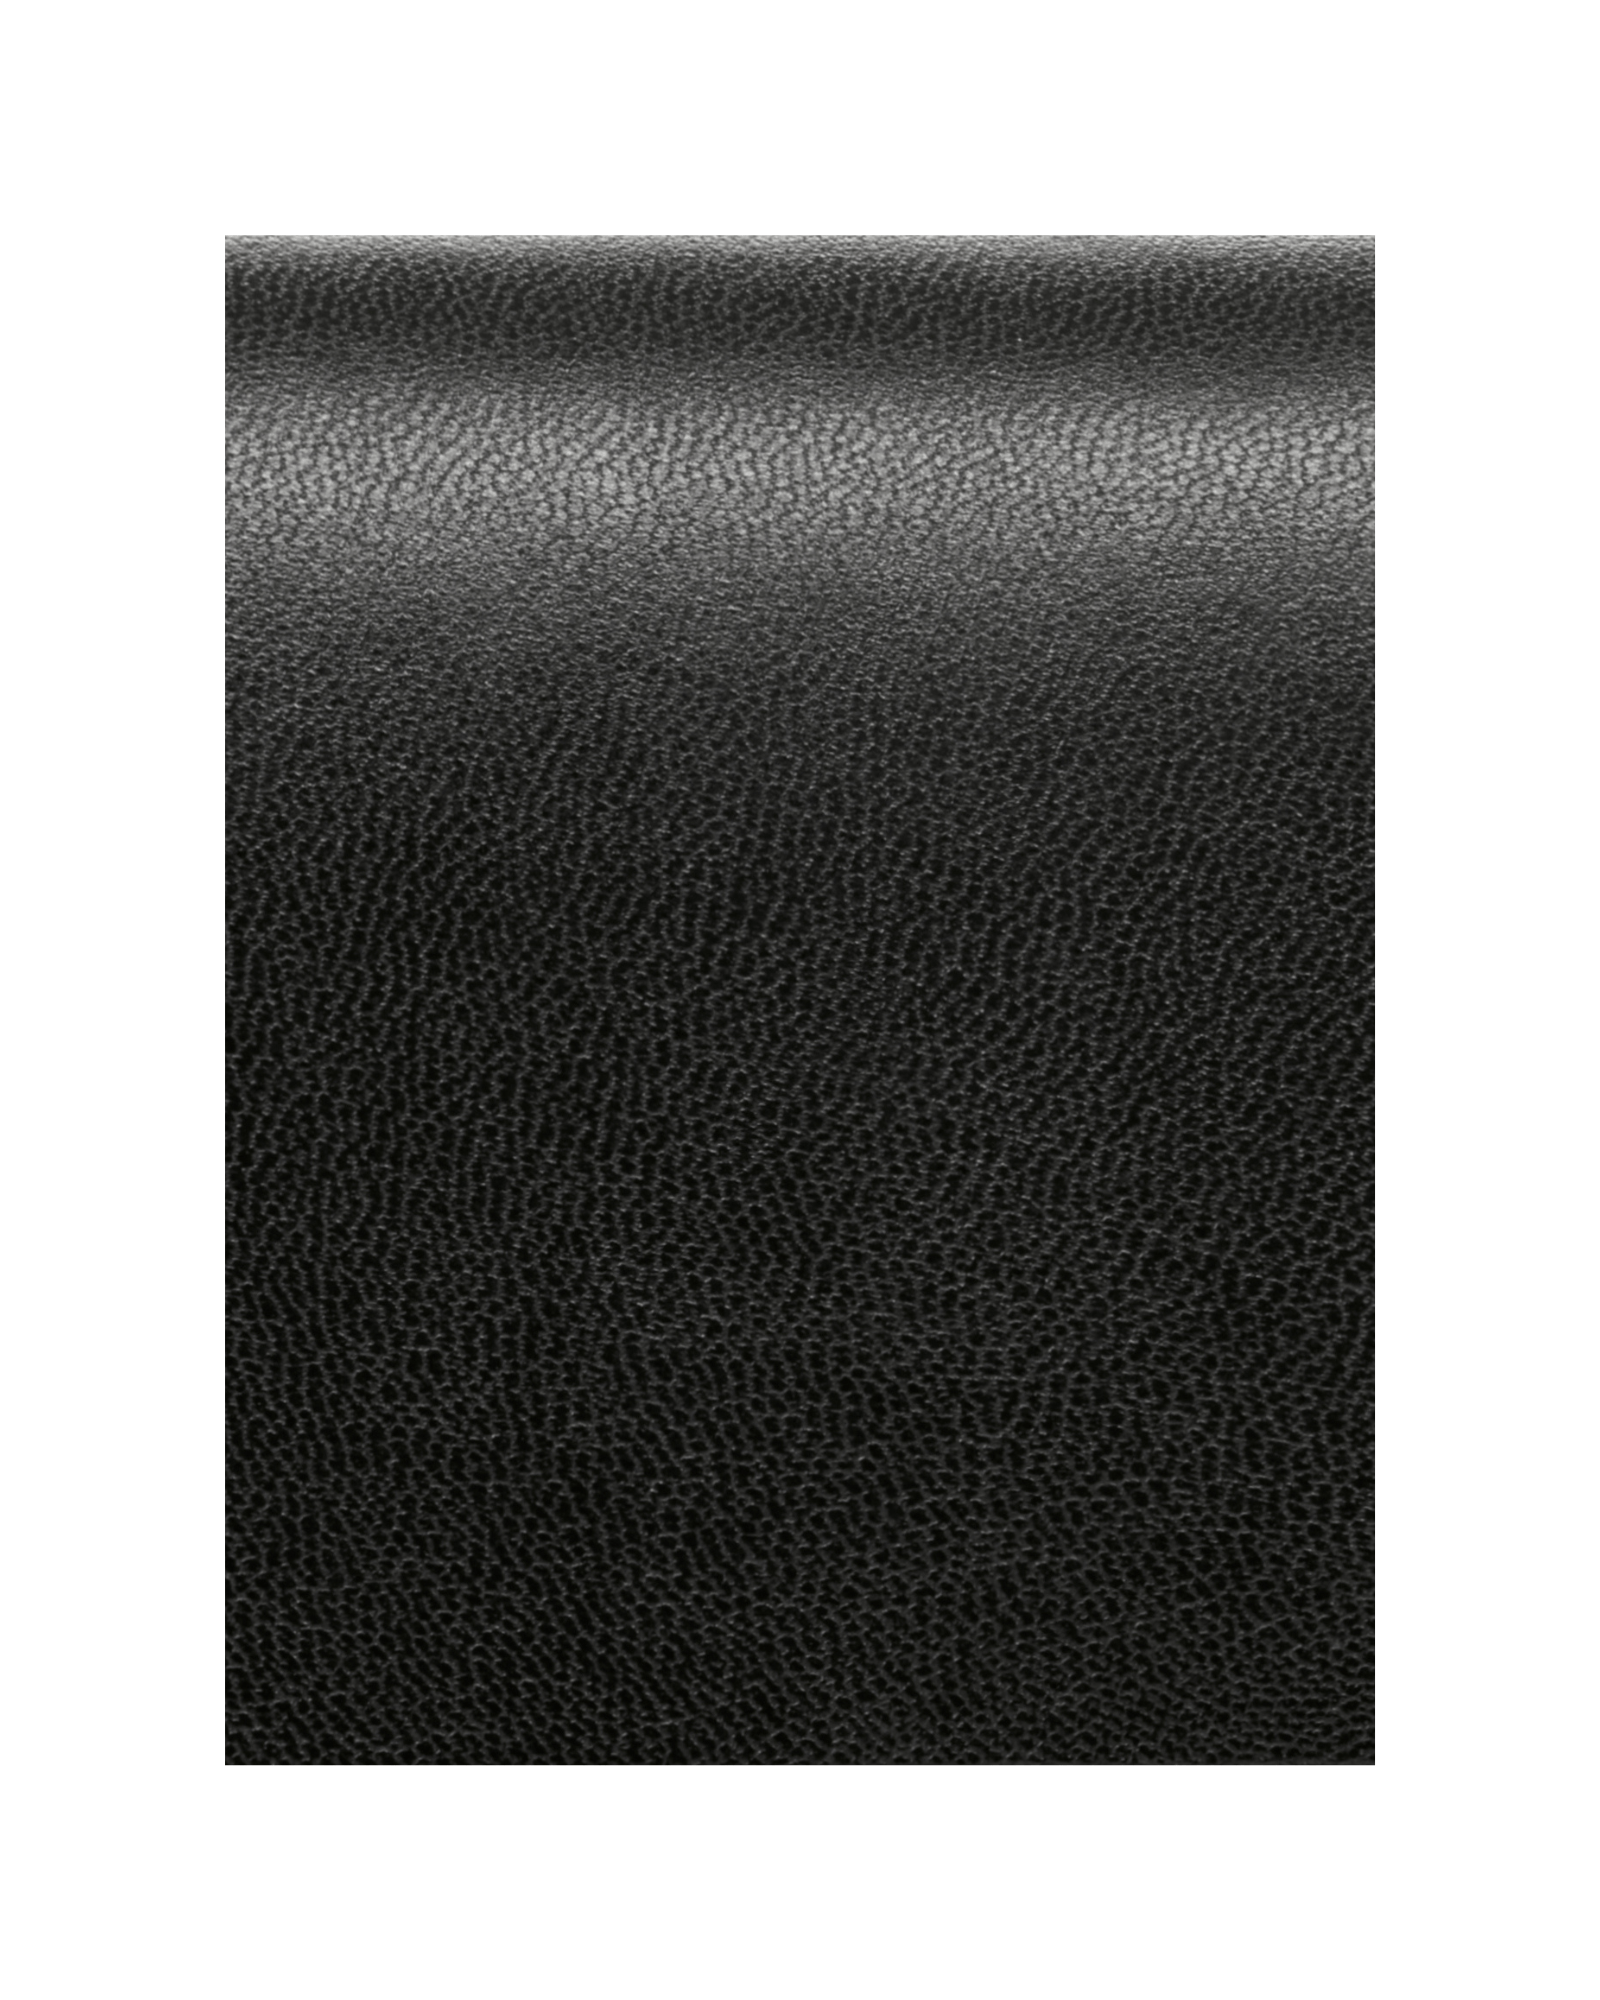 Black Leather image